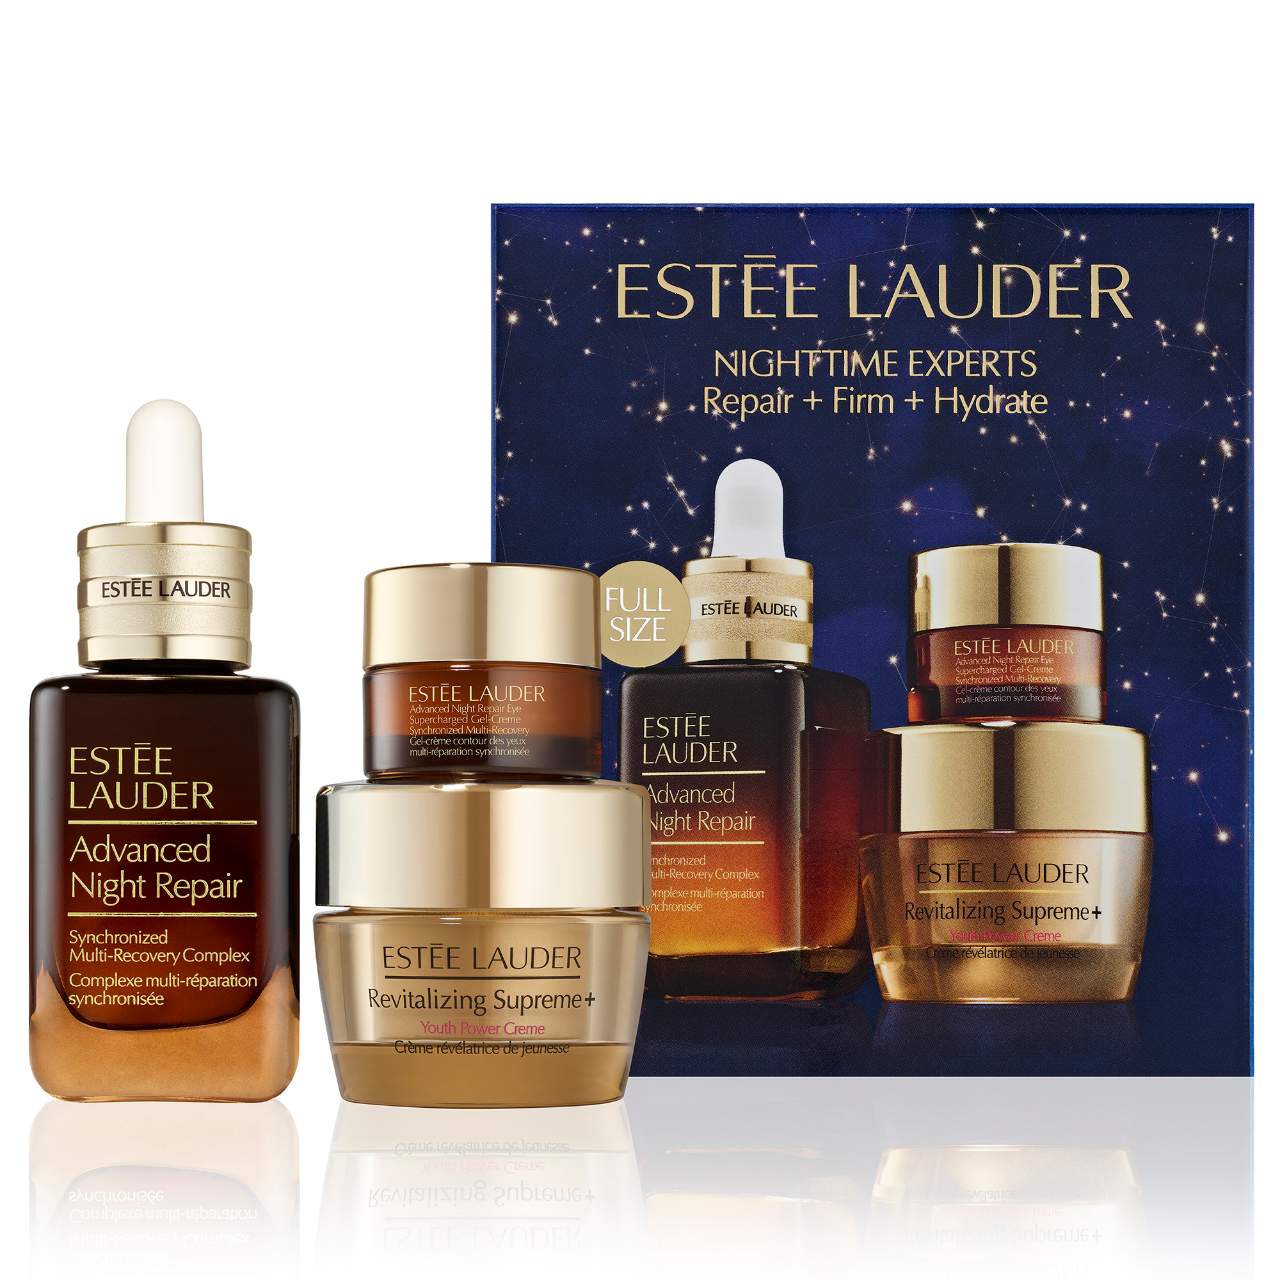 Estee Lauder Nighttime Experts Skincare SetRepair + Firm + Hydrate (Value $136.00)